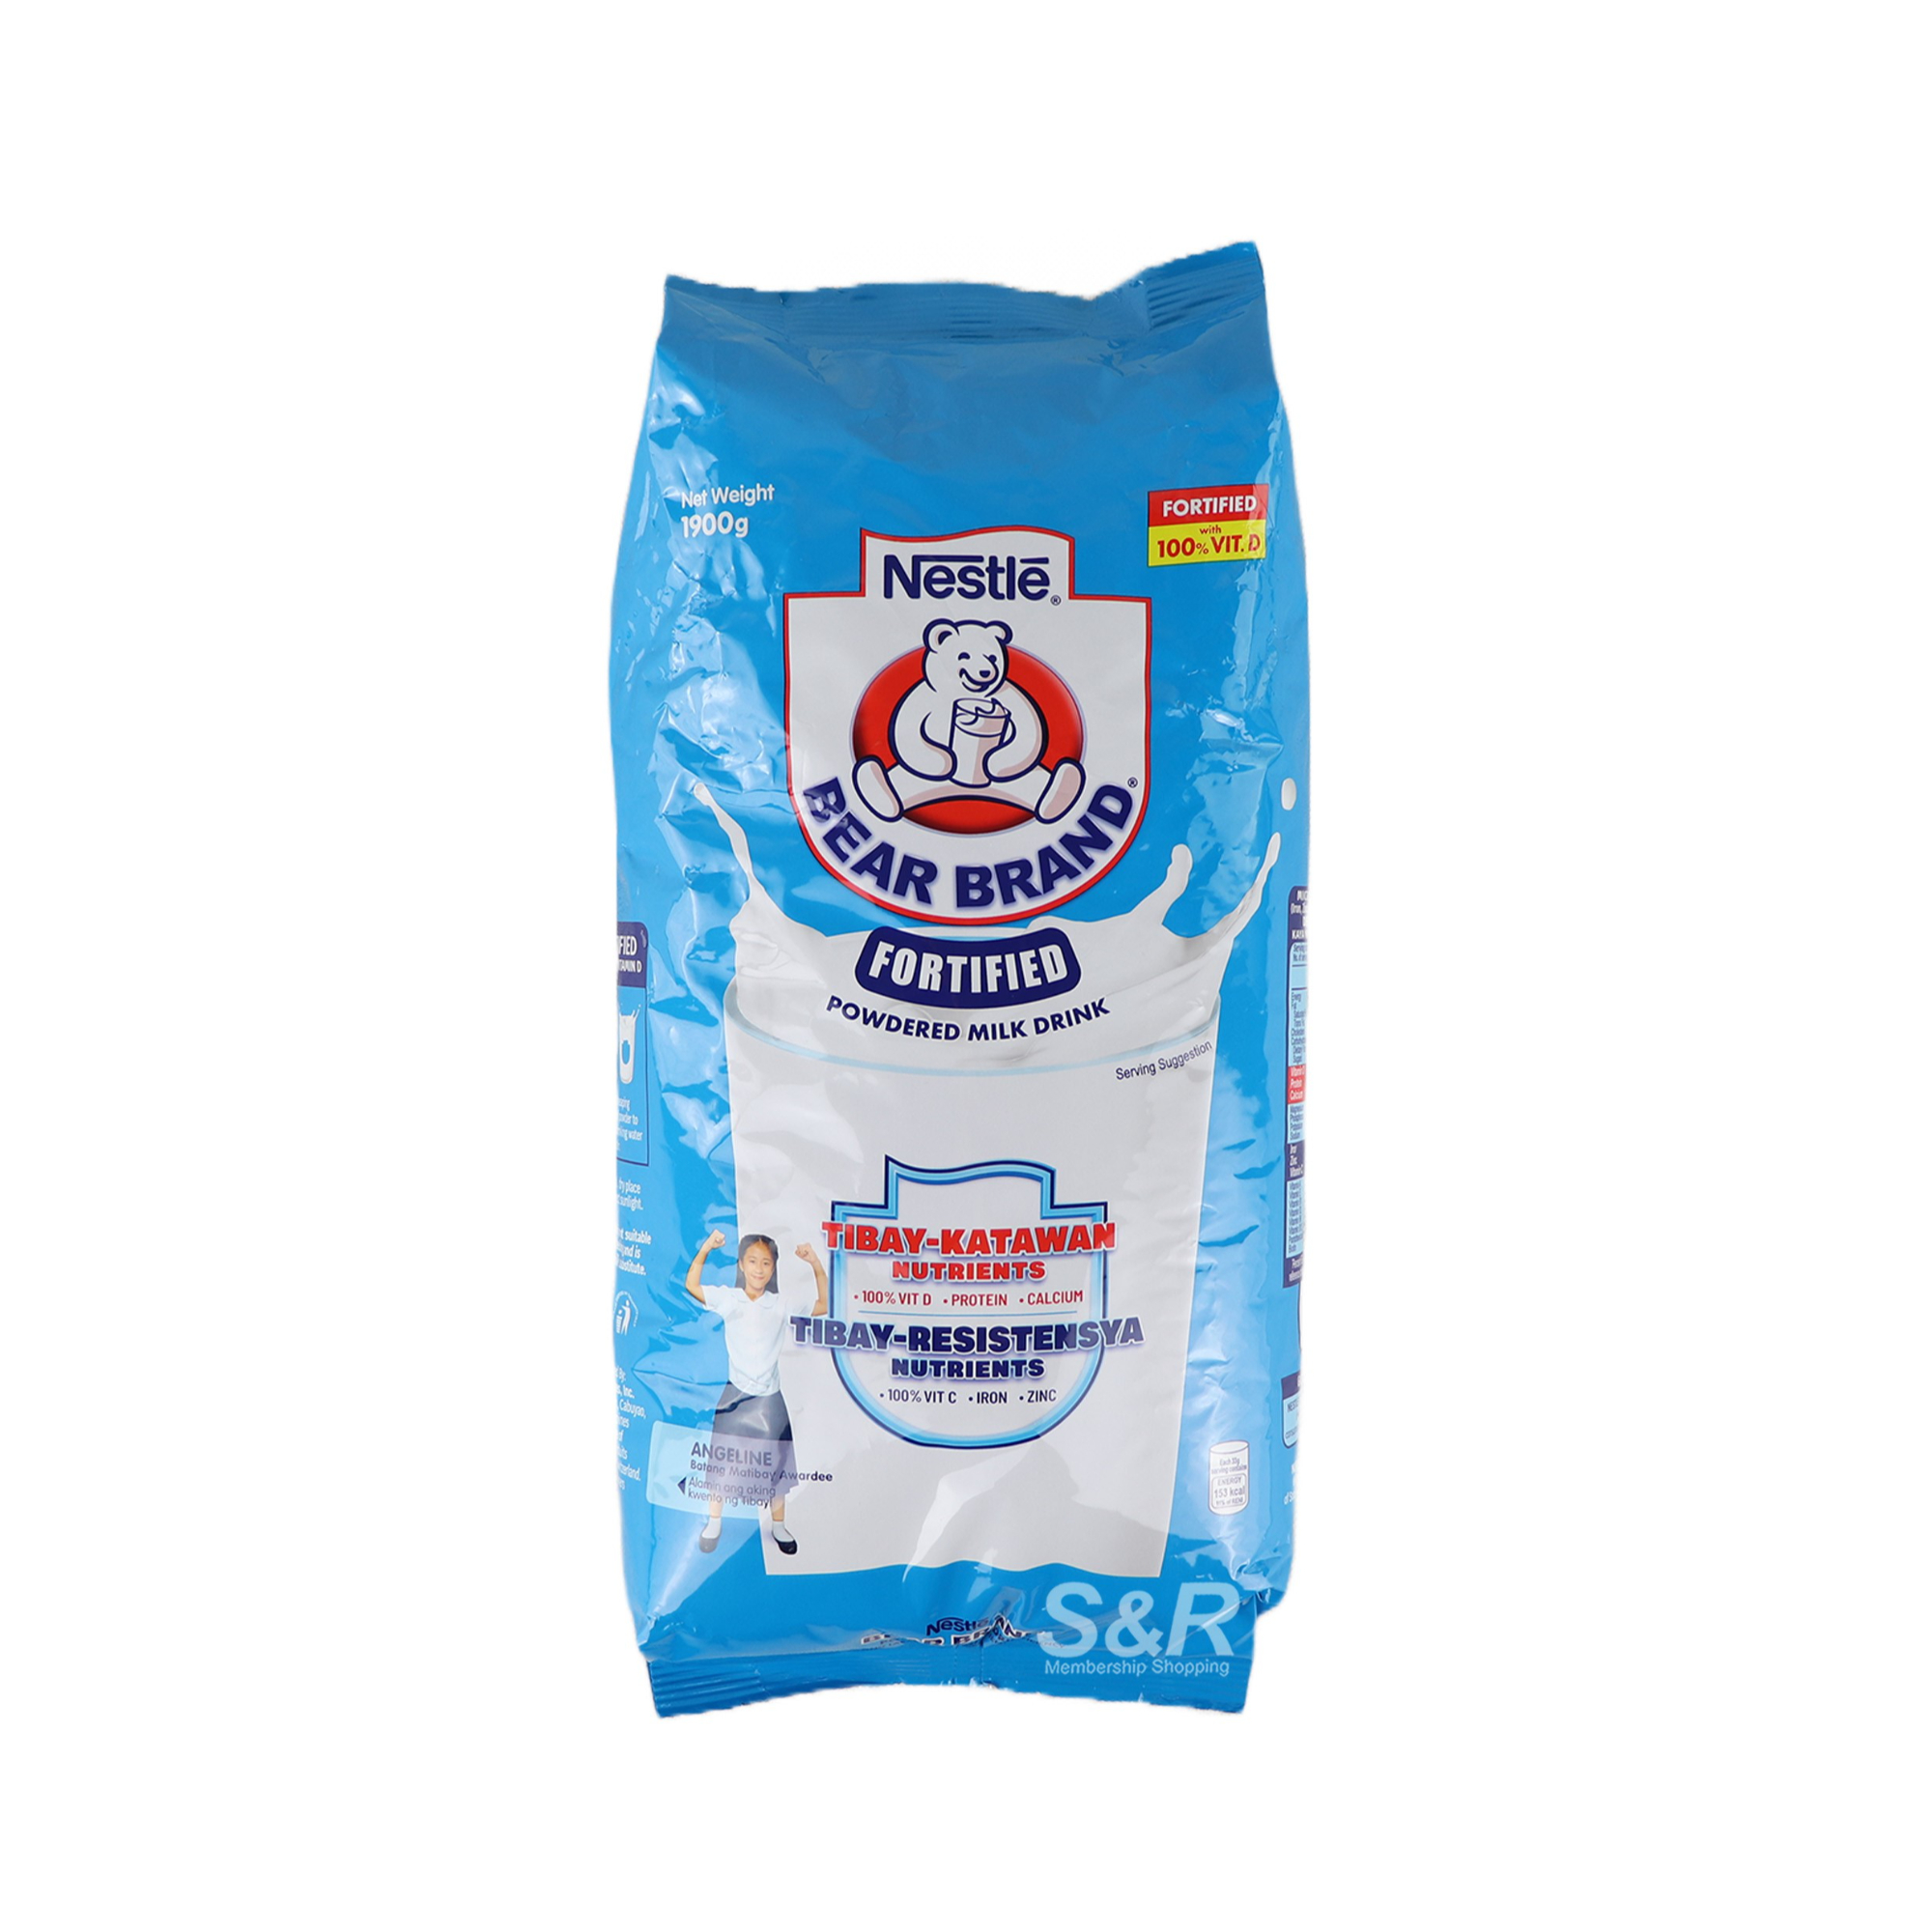 Bear Brand Fortified Powdered Milk Drink 1.9kg